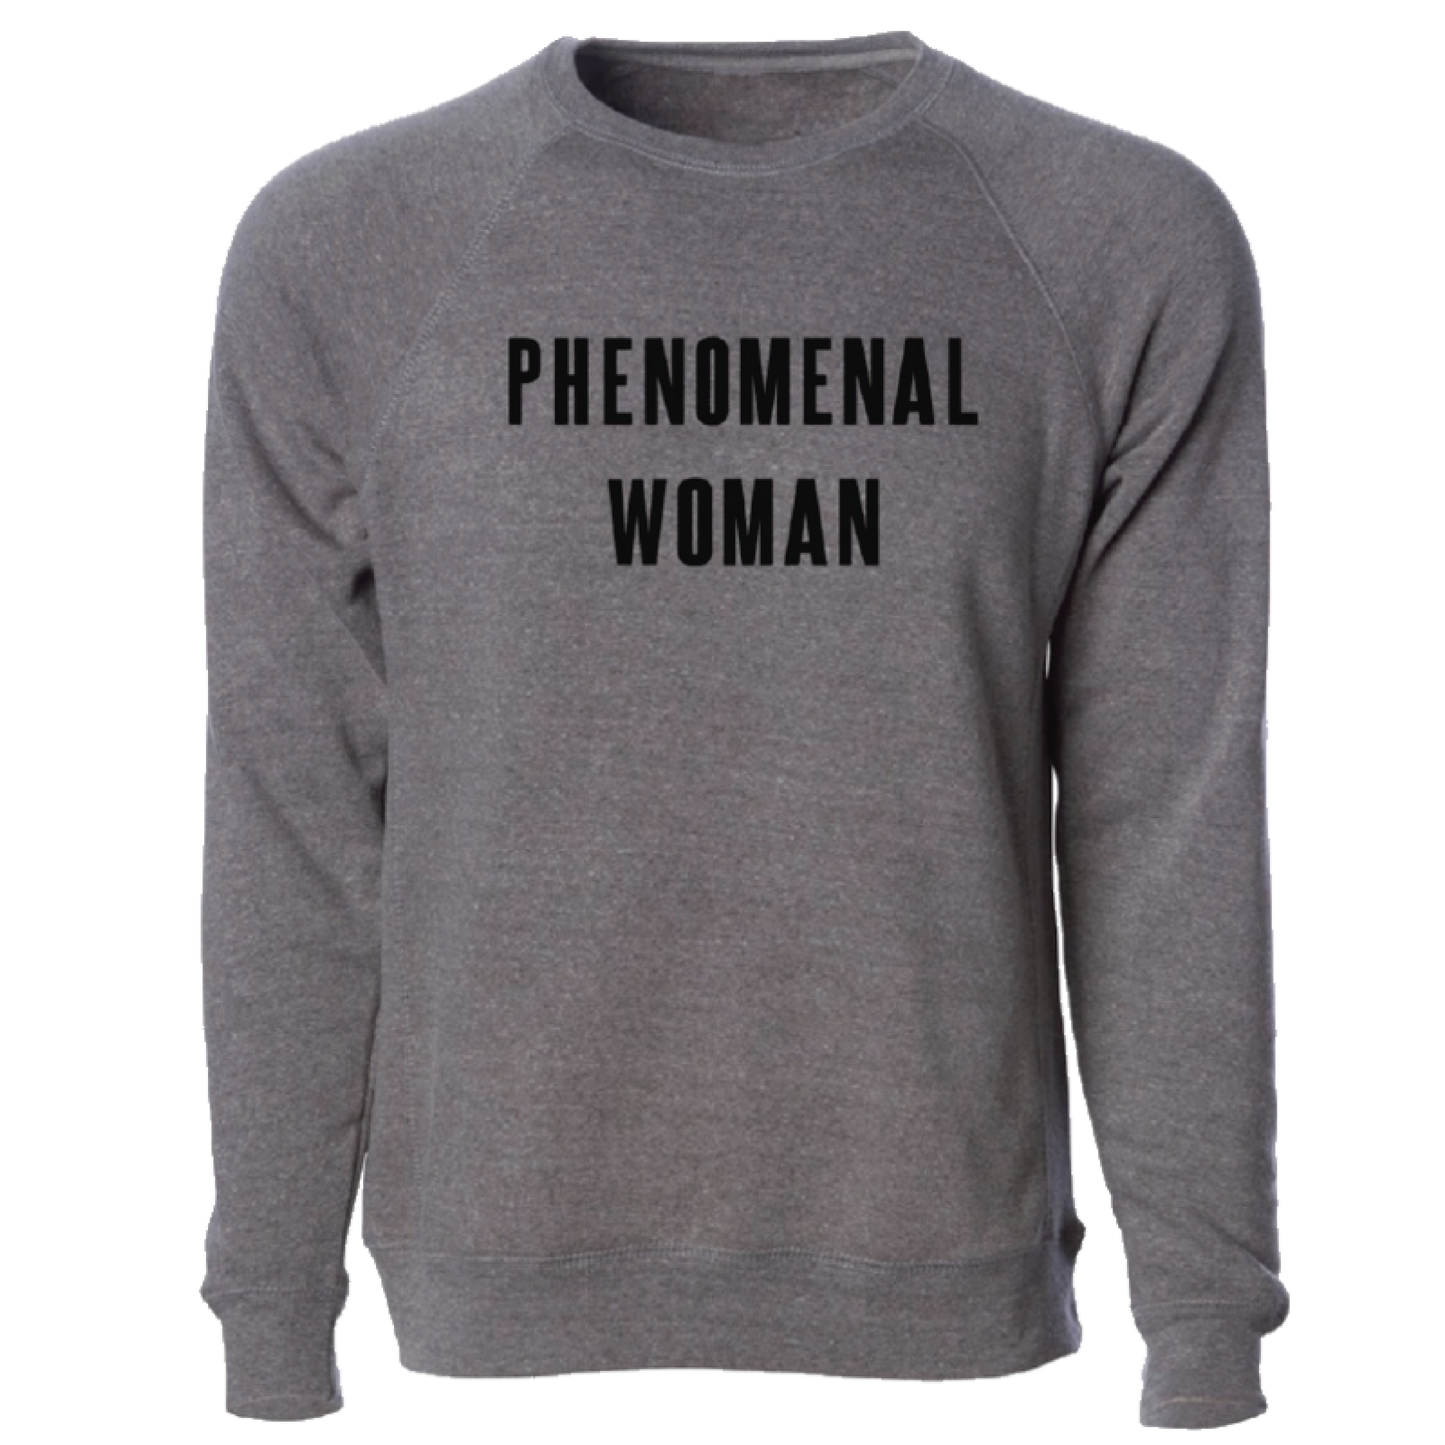 Phenomenal Woman Lightweight Crewneck Sweatshirt